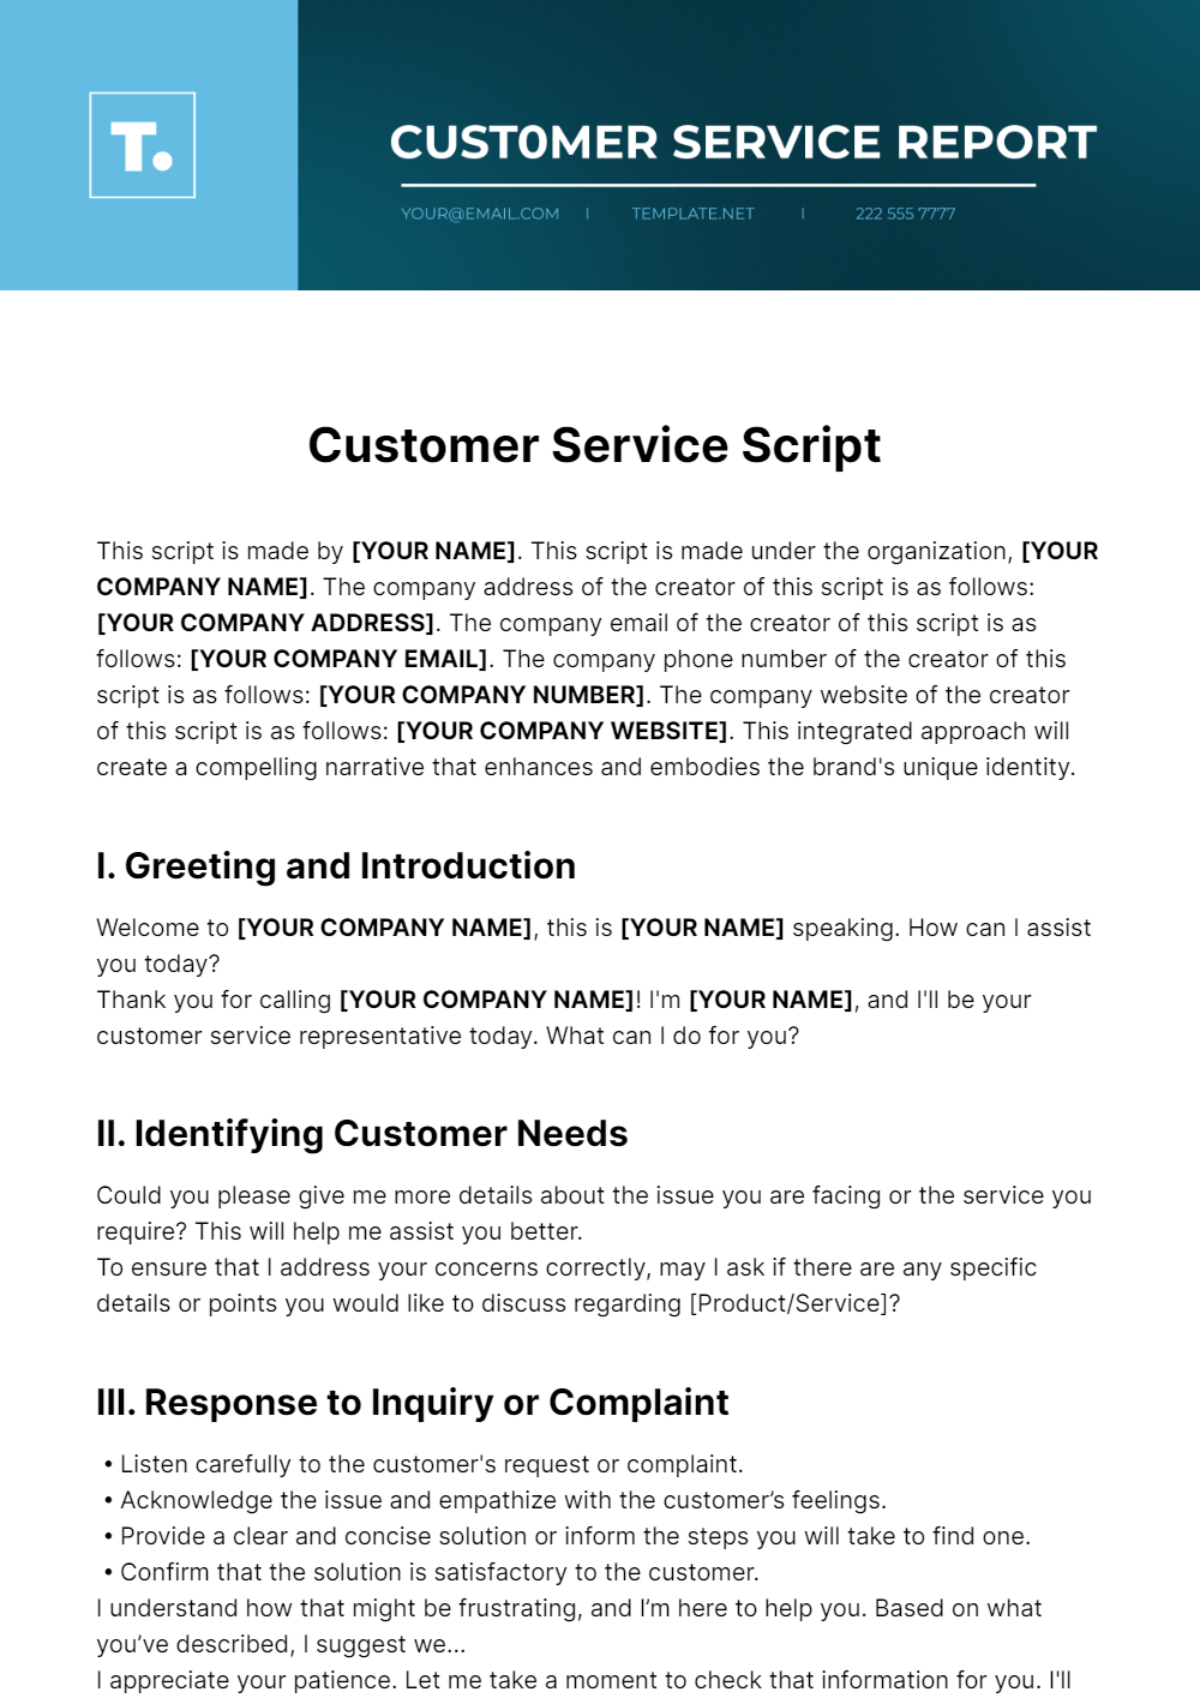 Customer Service Script Template